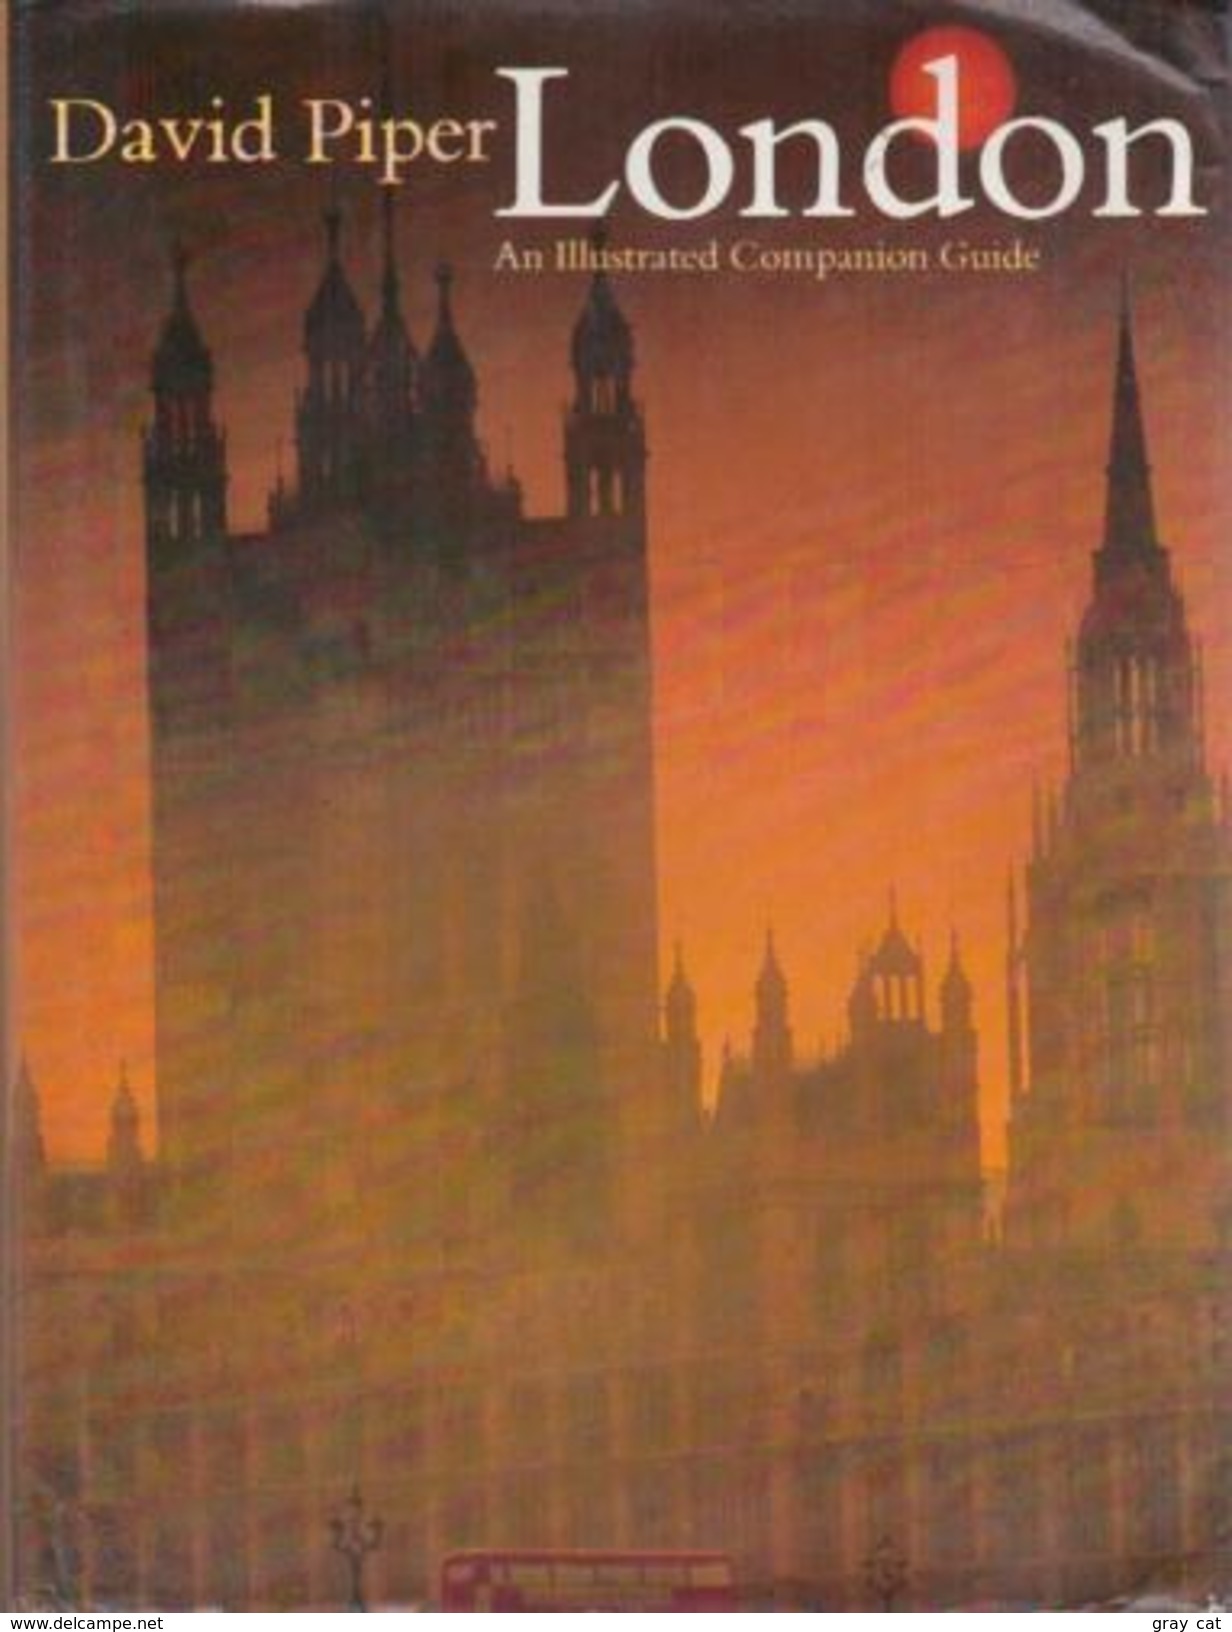 London An Illustrated Companion Guide By Piper, David (ISBN 9780002162876) - Viajes/Exploración